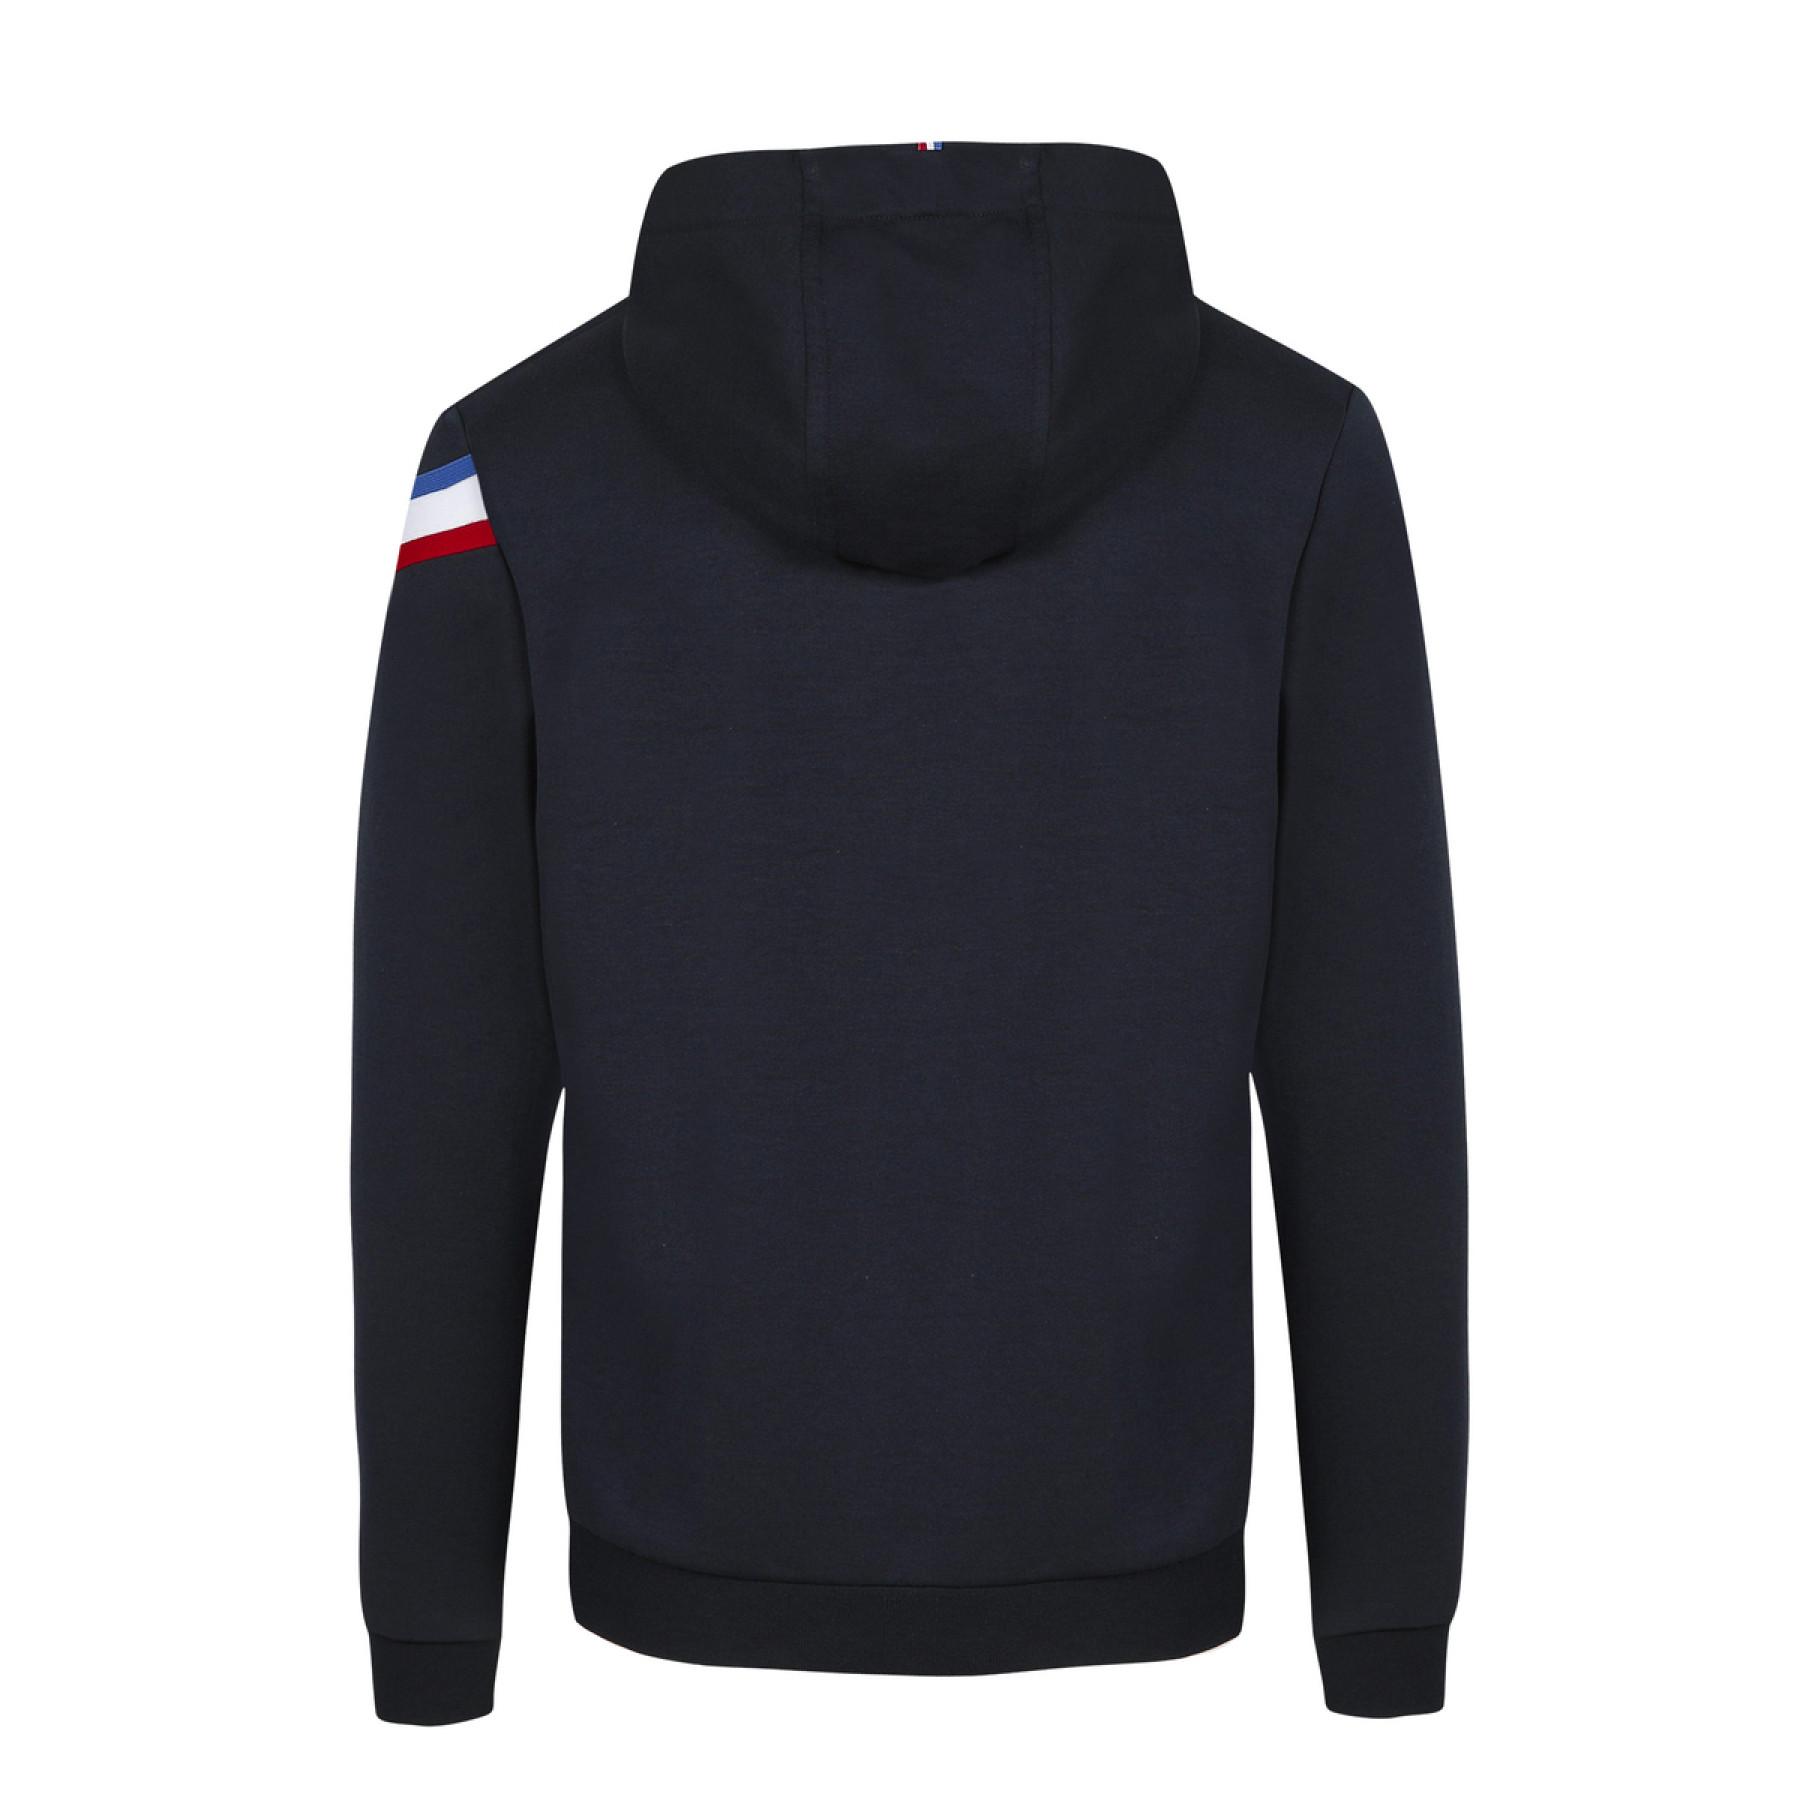 Hooded sweatshirt Le Coq Sportif Tricolore n°4